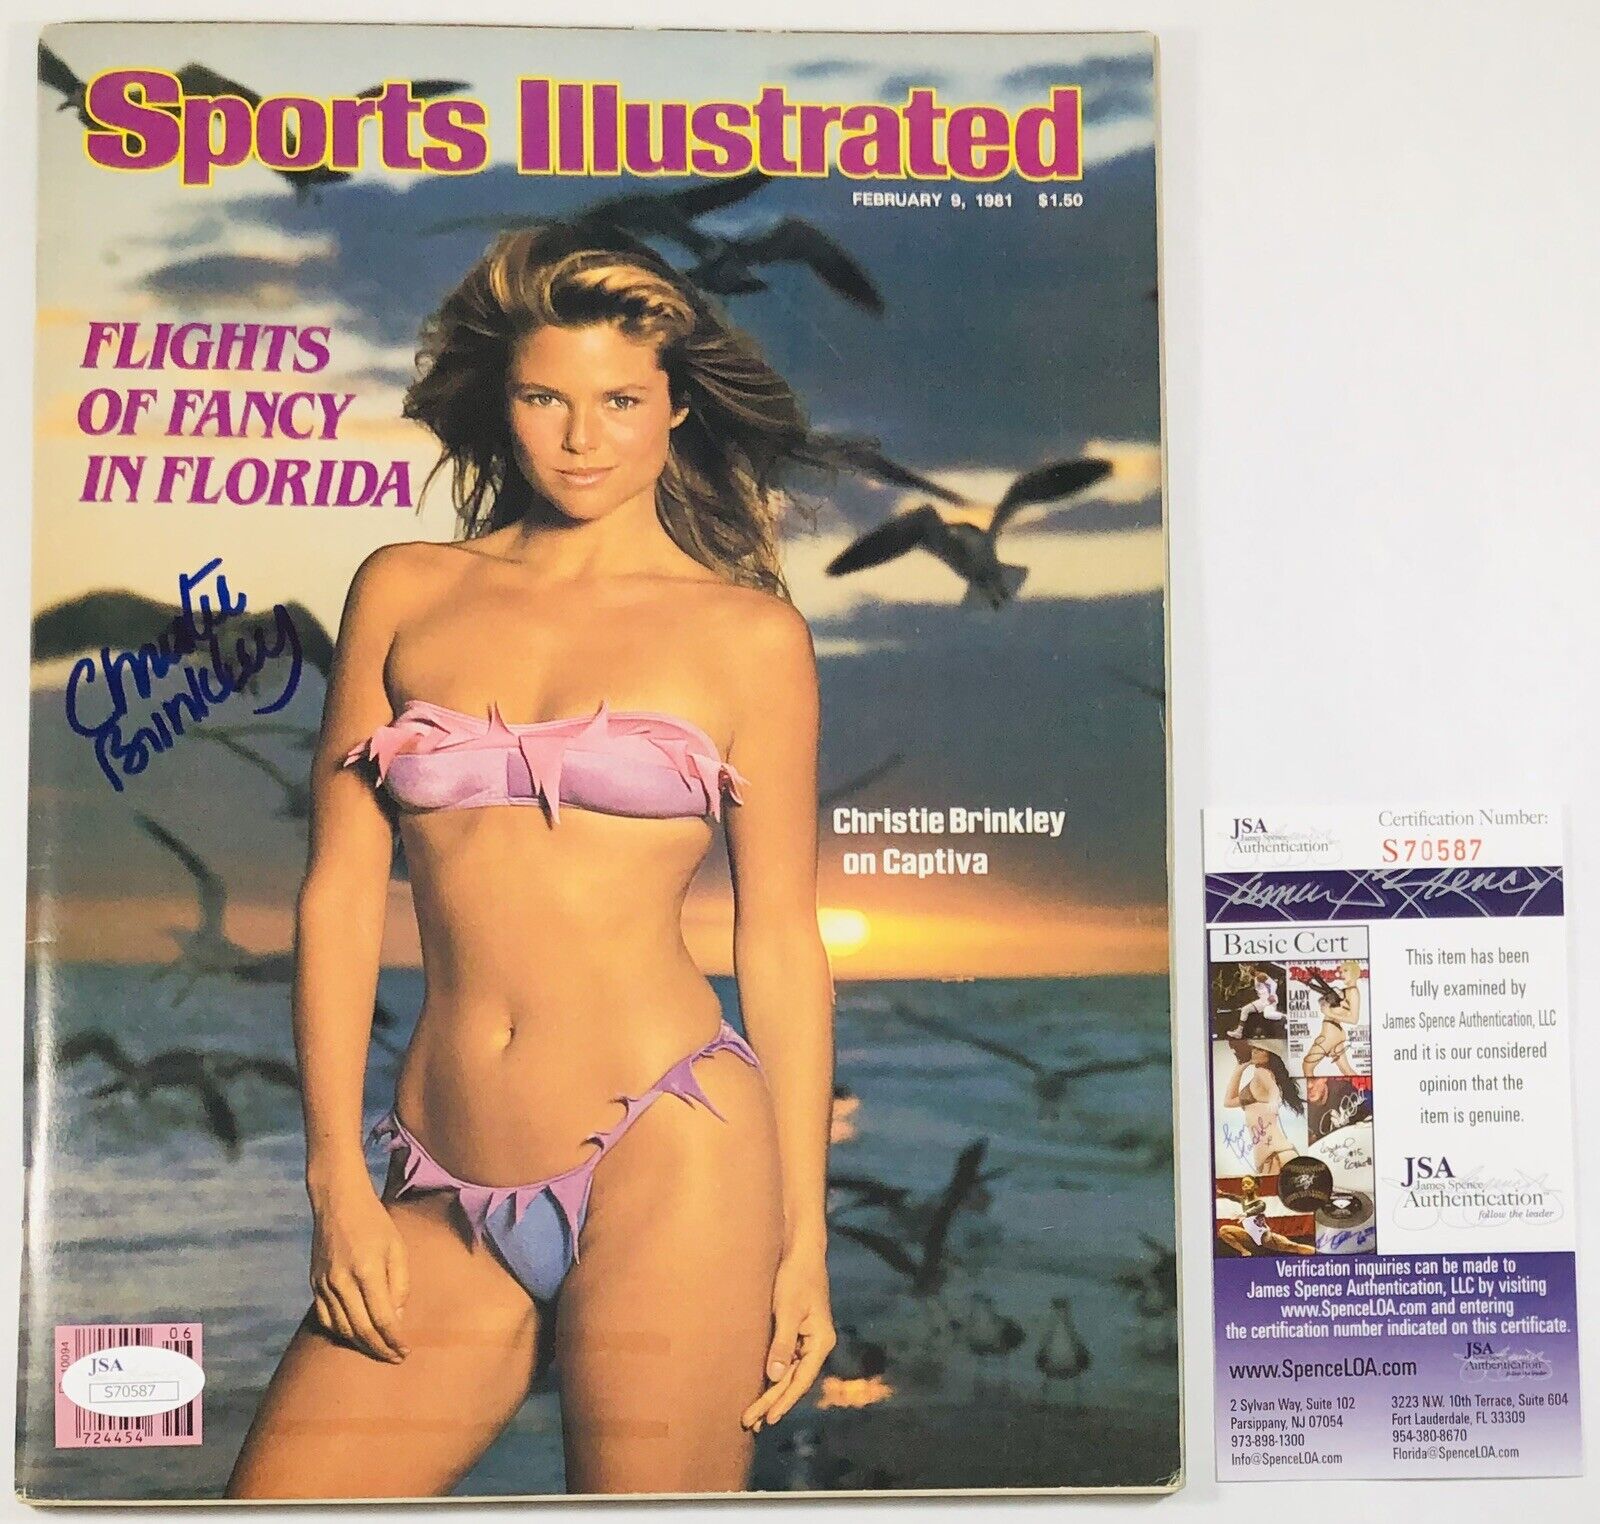 Christie Brinkley Signed Sports Illustrated Magazine February 1981 Issue JSA COA